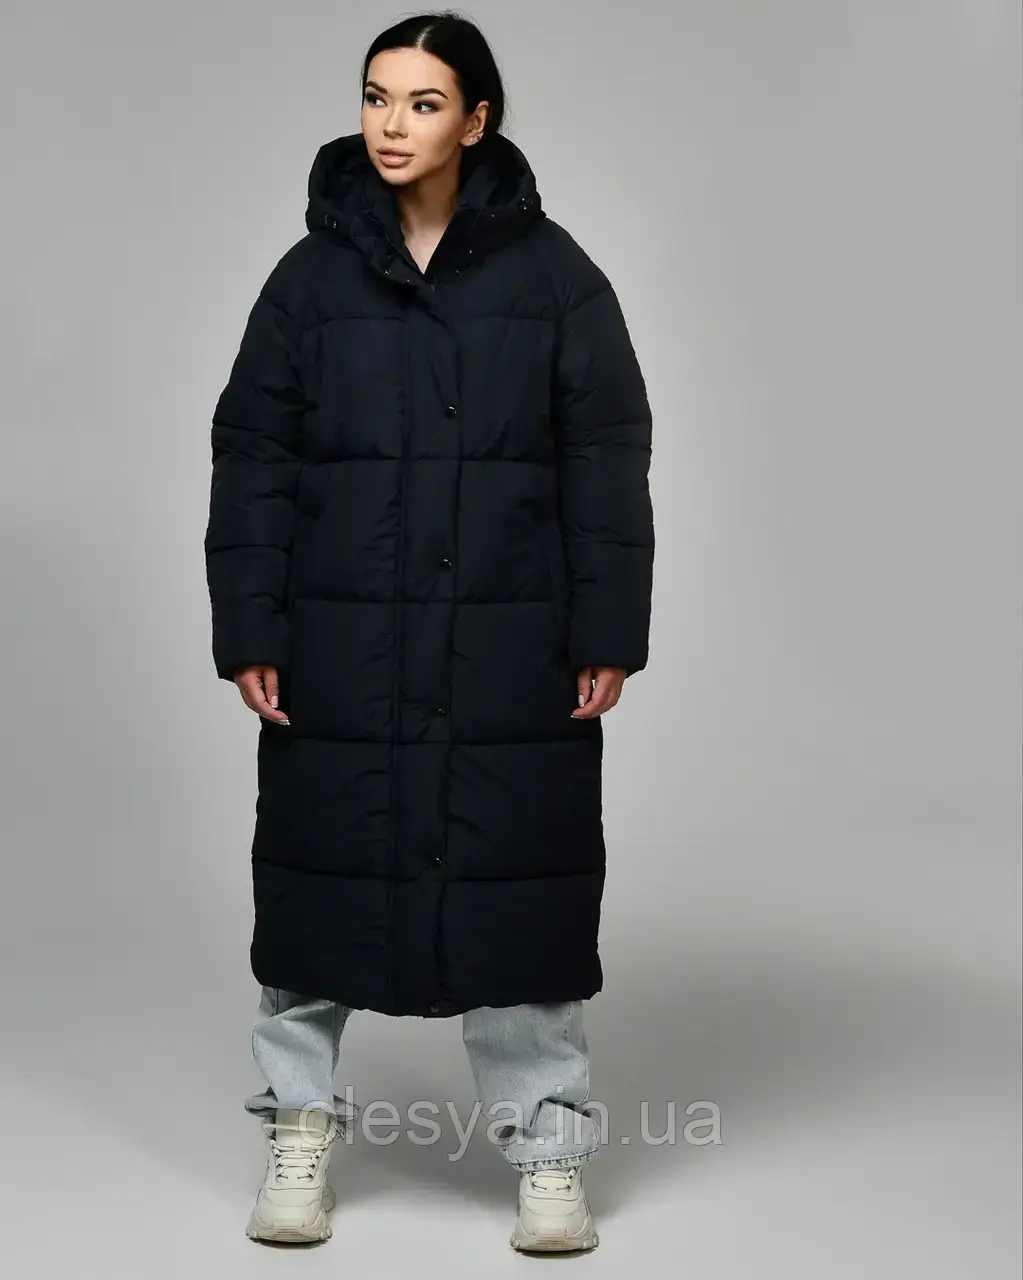 Зимняя молодежная модная куртка X-Woyz 8918-29 размеры 42 46 48